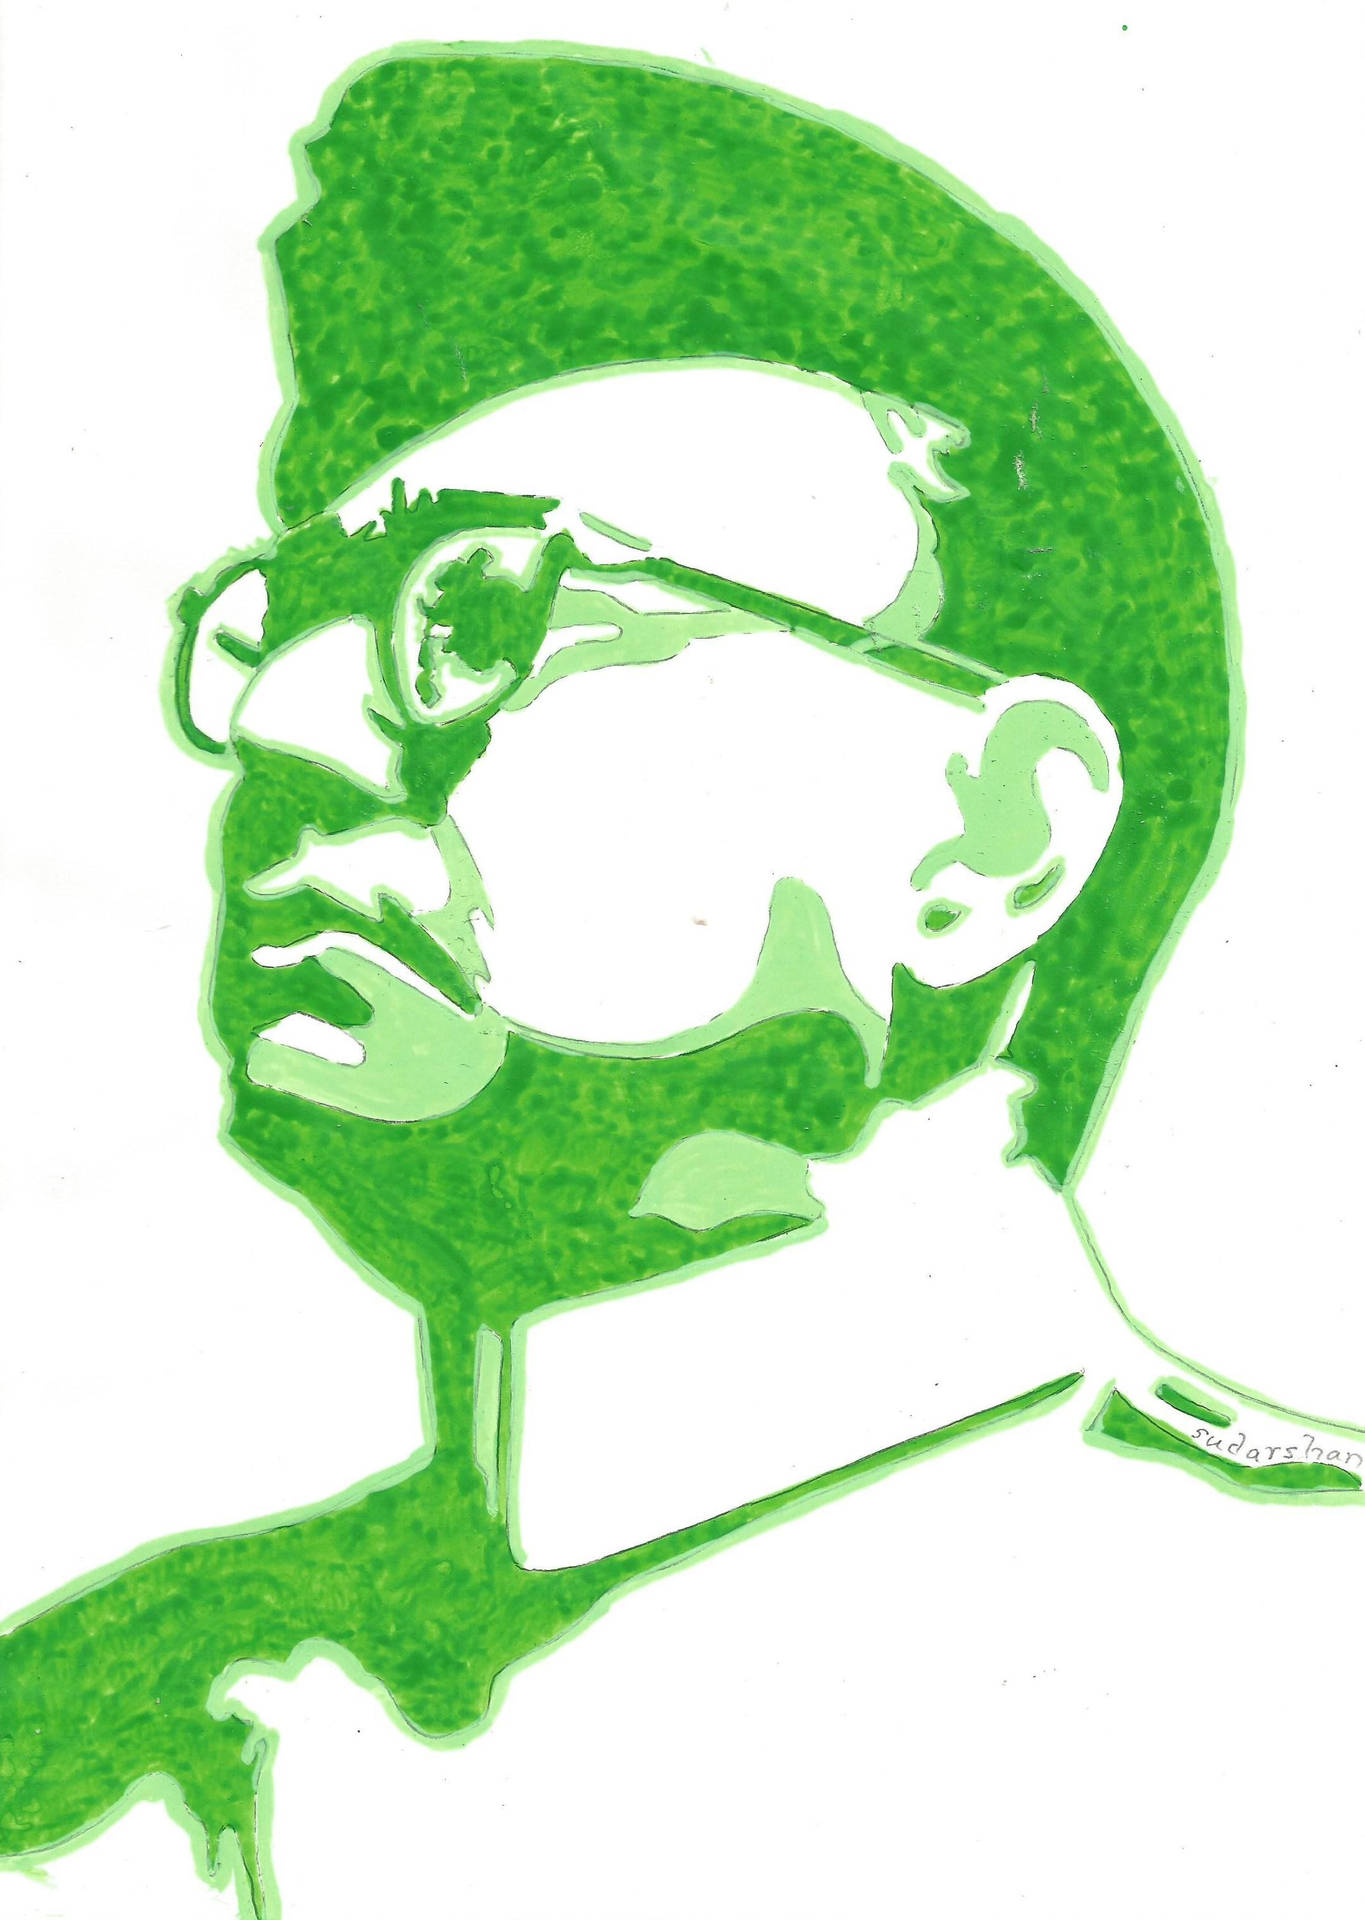 Netaji Subash Chandra Bose – imageinmyhead